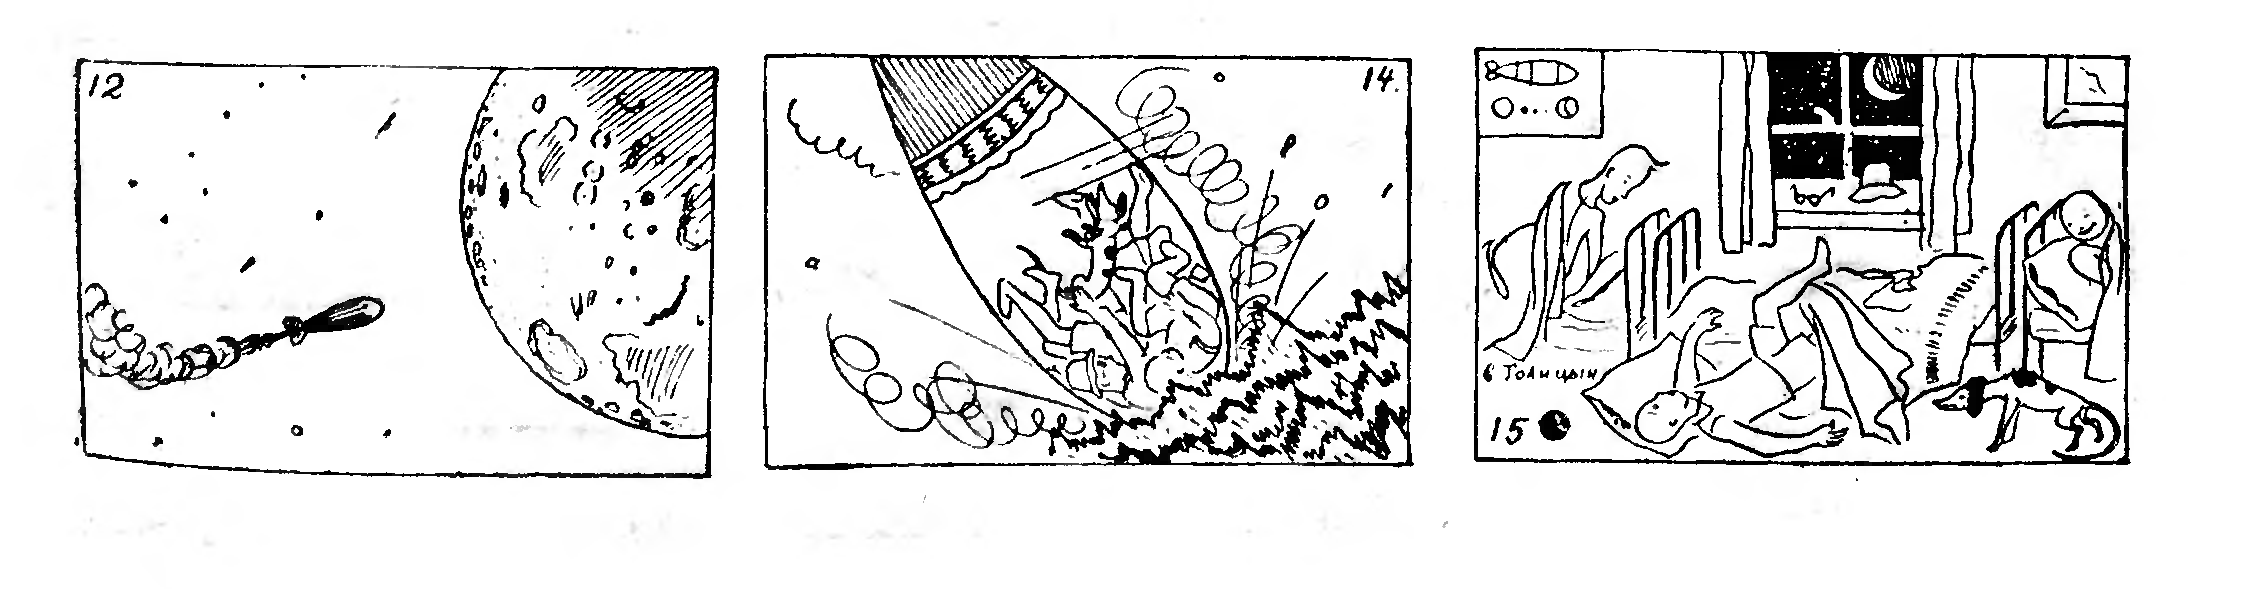 11_Комикс Владимира Голицына в «Знание — сила» №23-24 1932 г._5.png